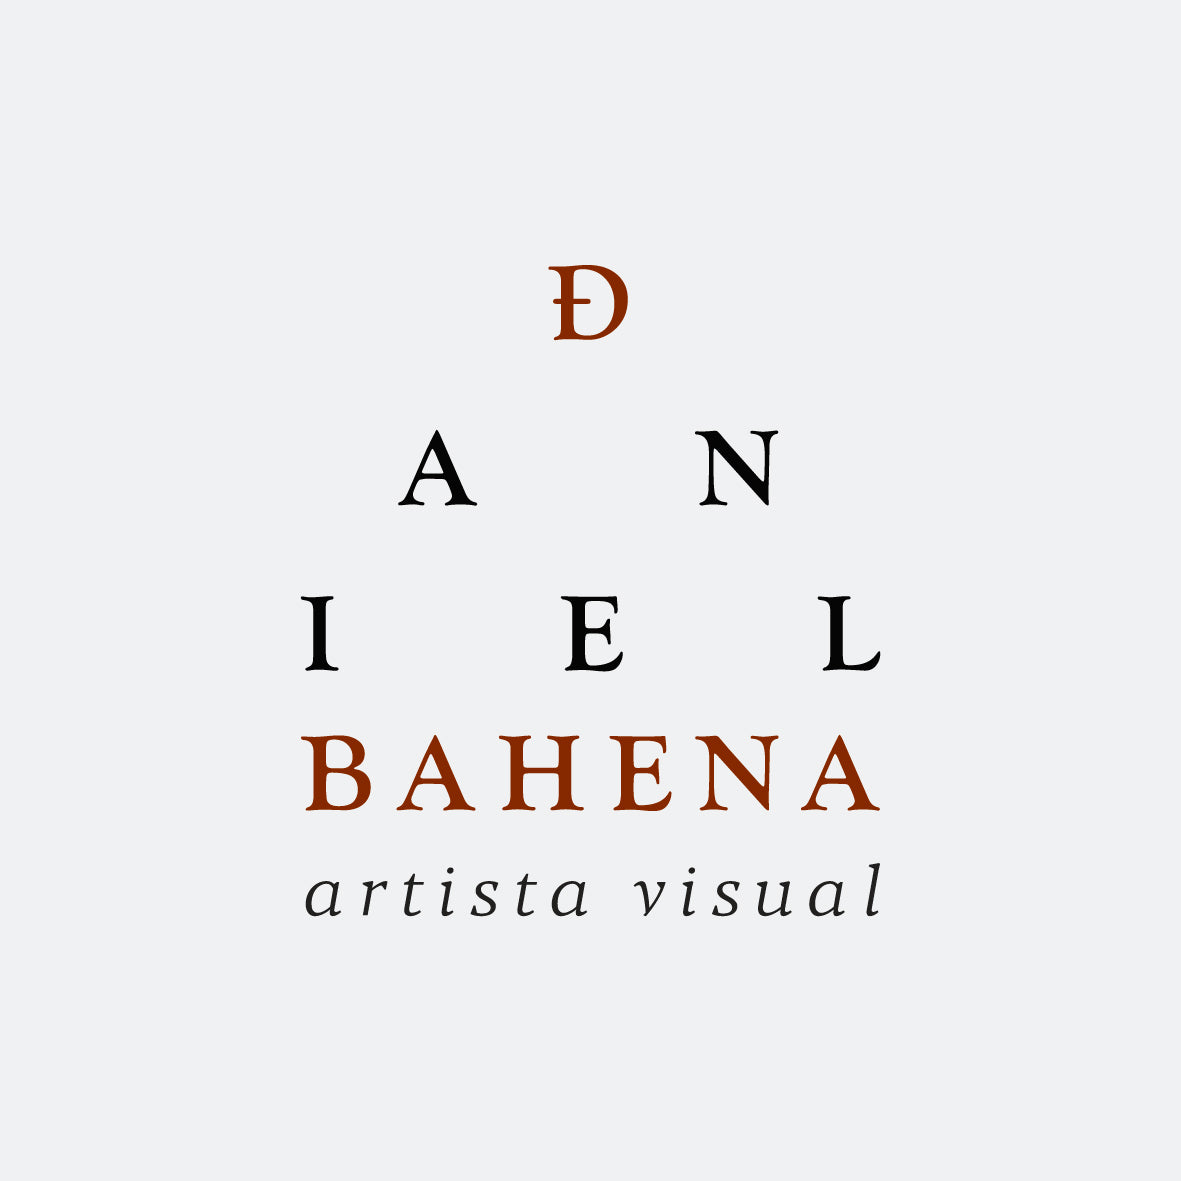 DanielBahena